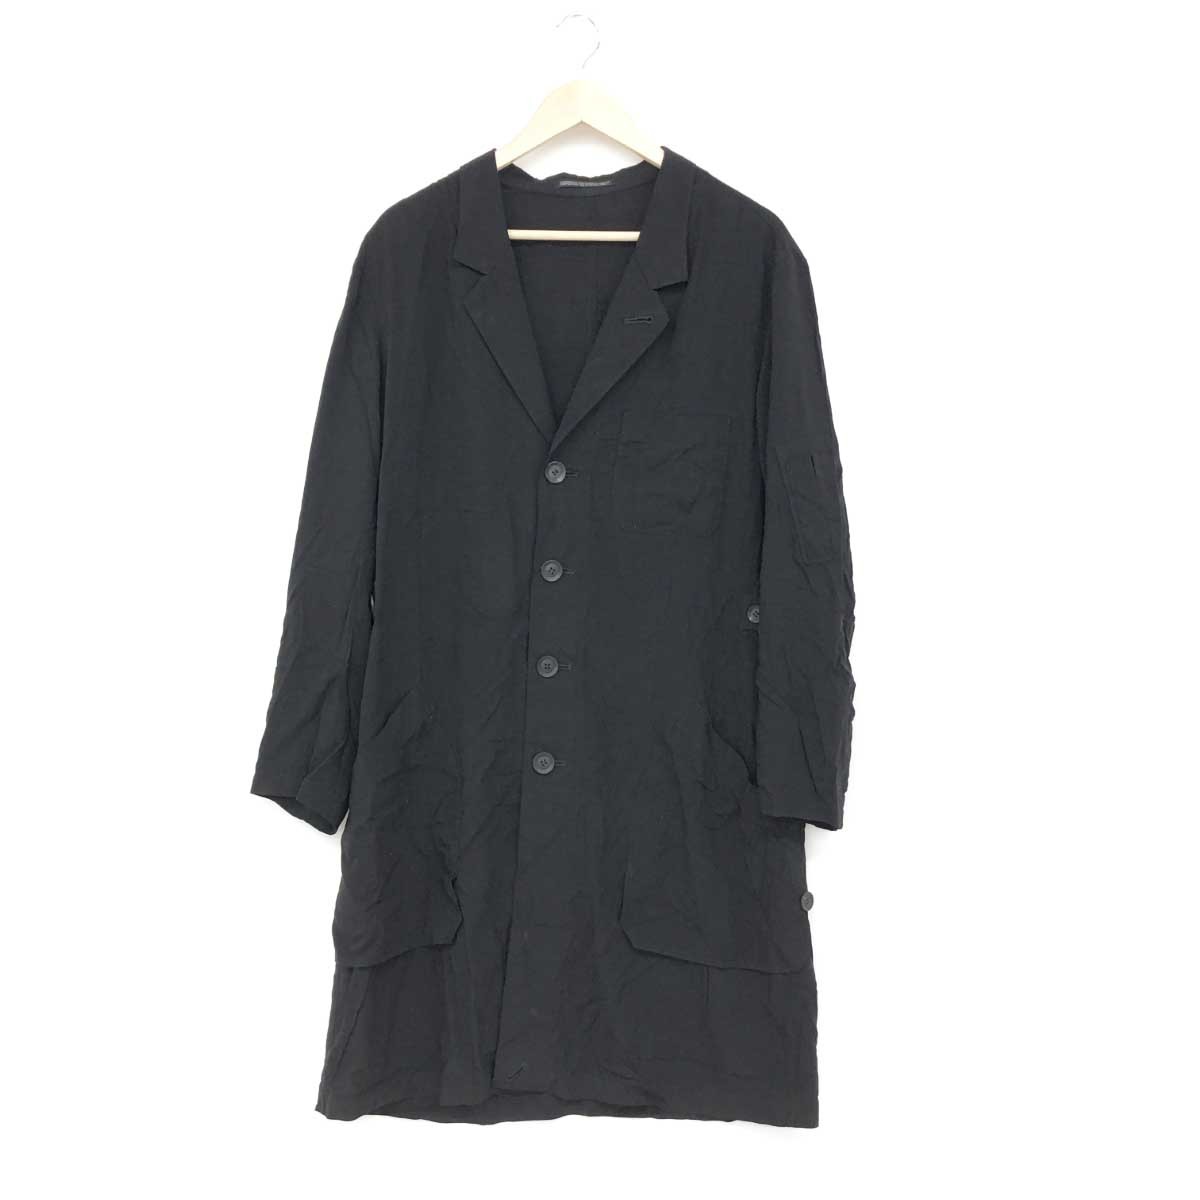 ◆YOHJI YAMAMOTO ヨウジヤマモト ワークシャツジャケット ◆FG-J80-204 ブラック メンズ アウター RY LAWN WORK SHIRT JKT